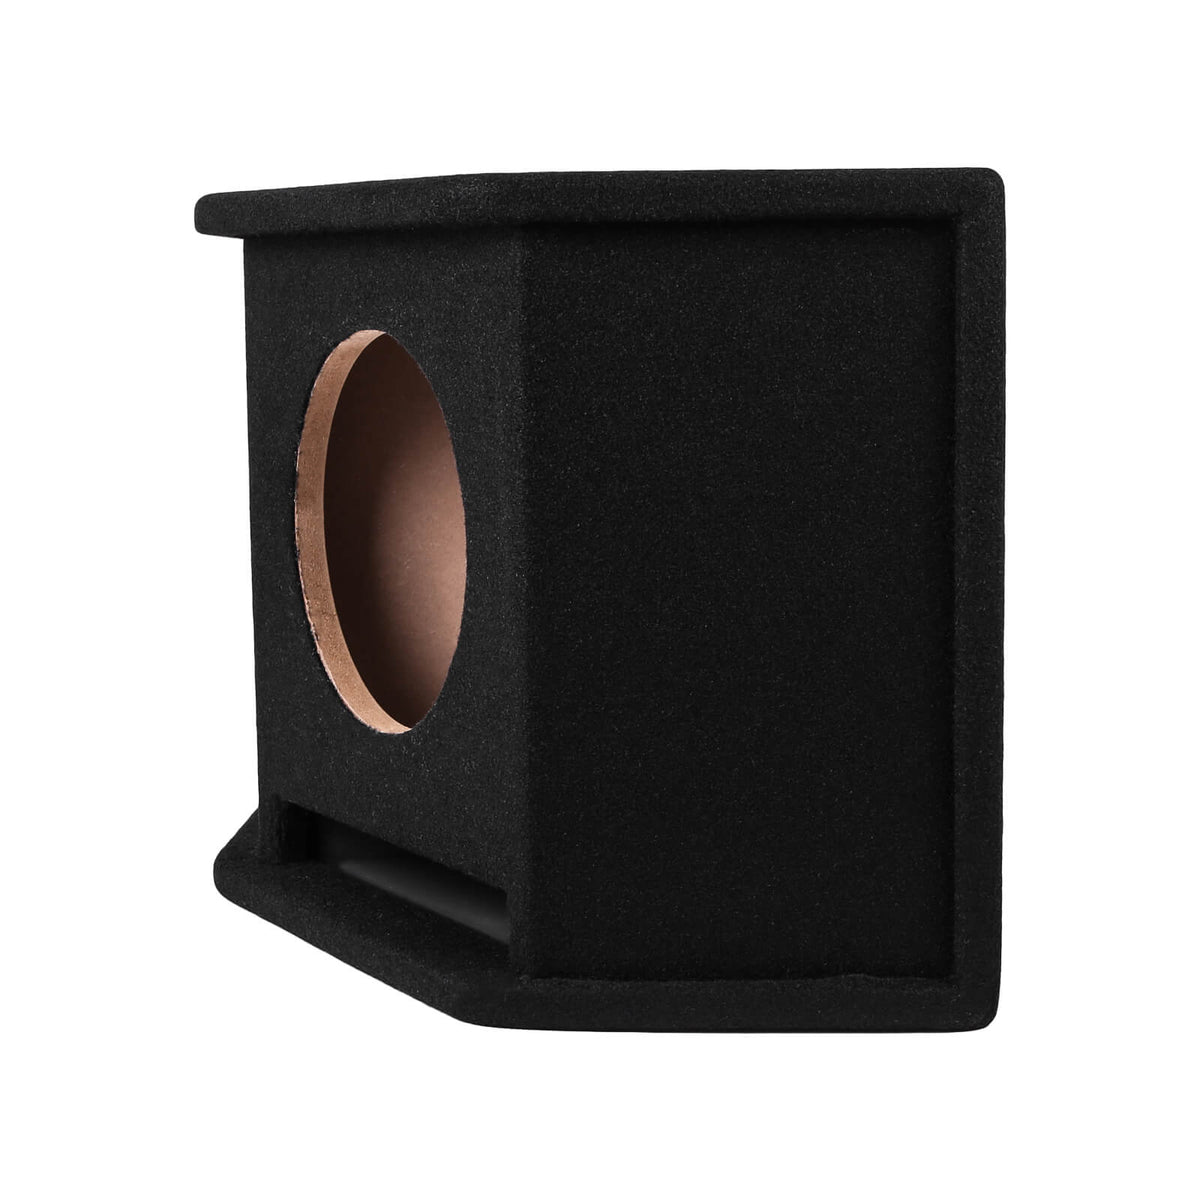 speaker enclosure design software for mac